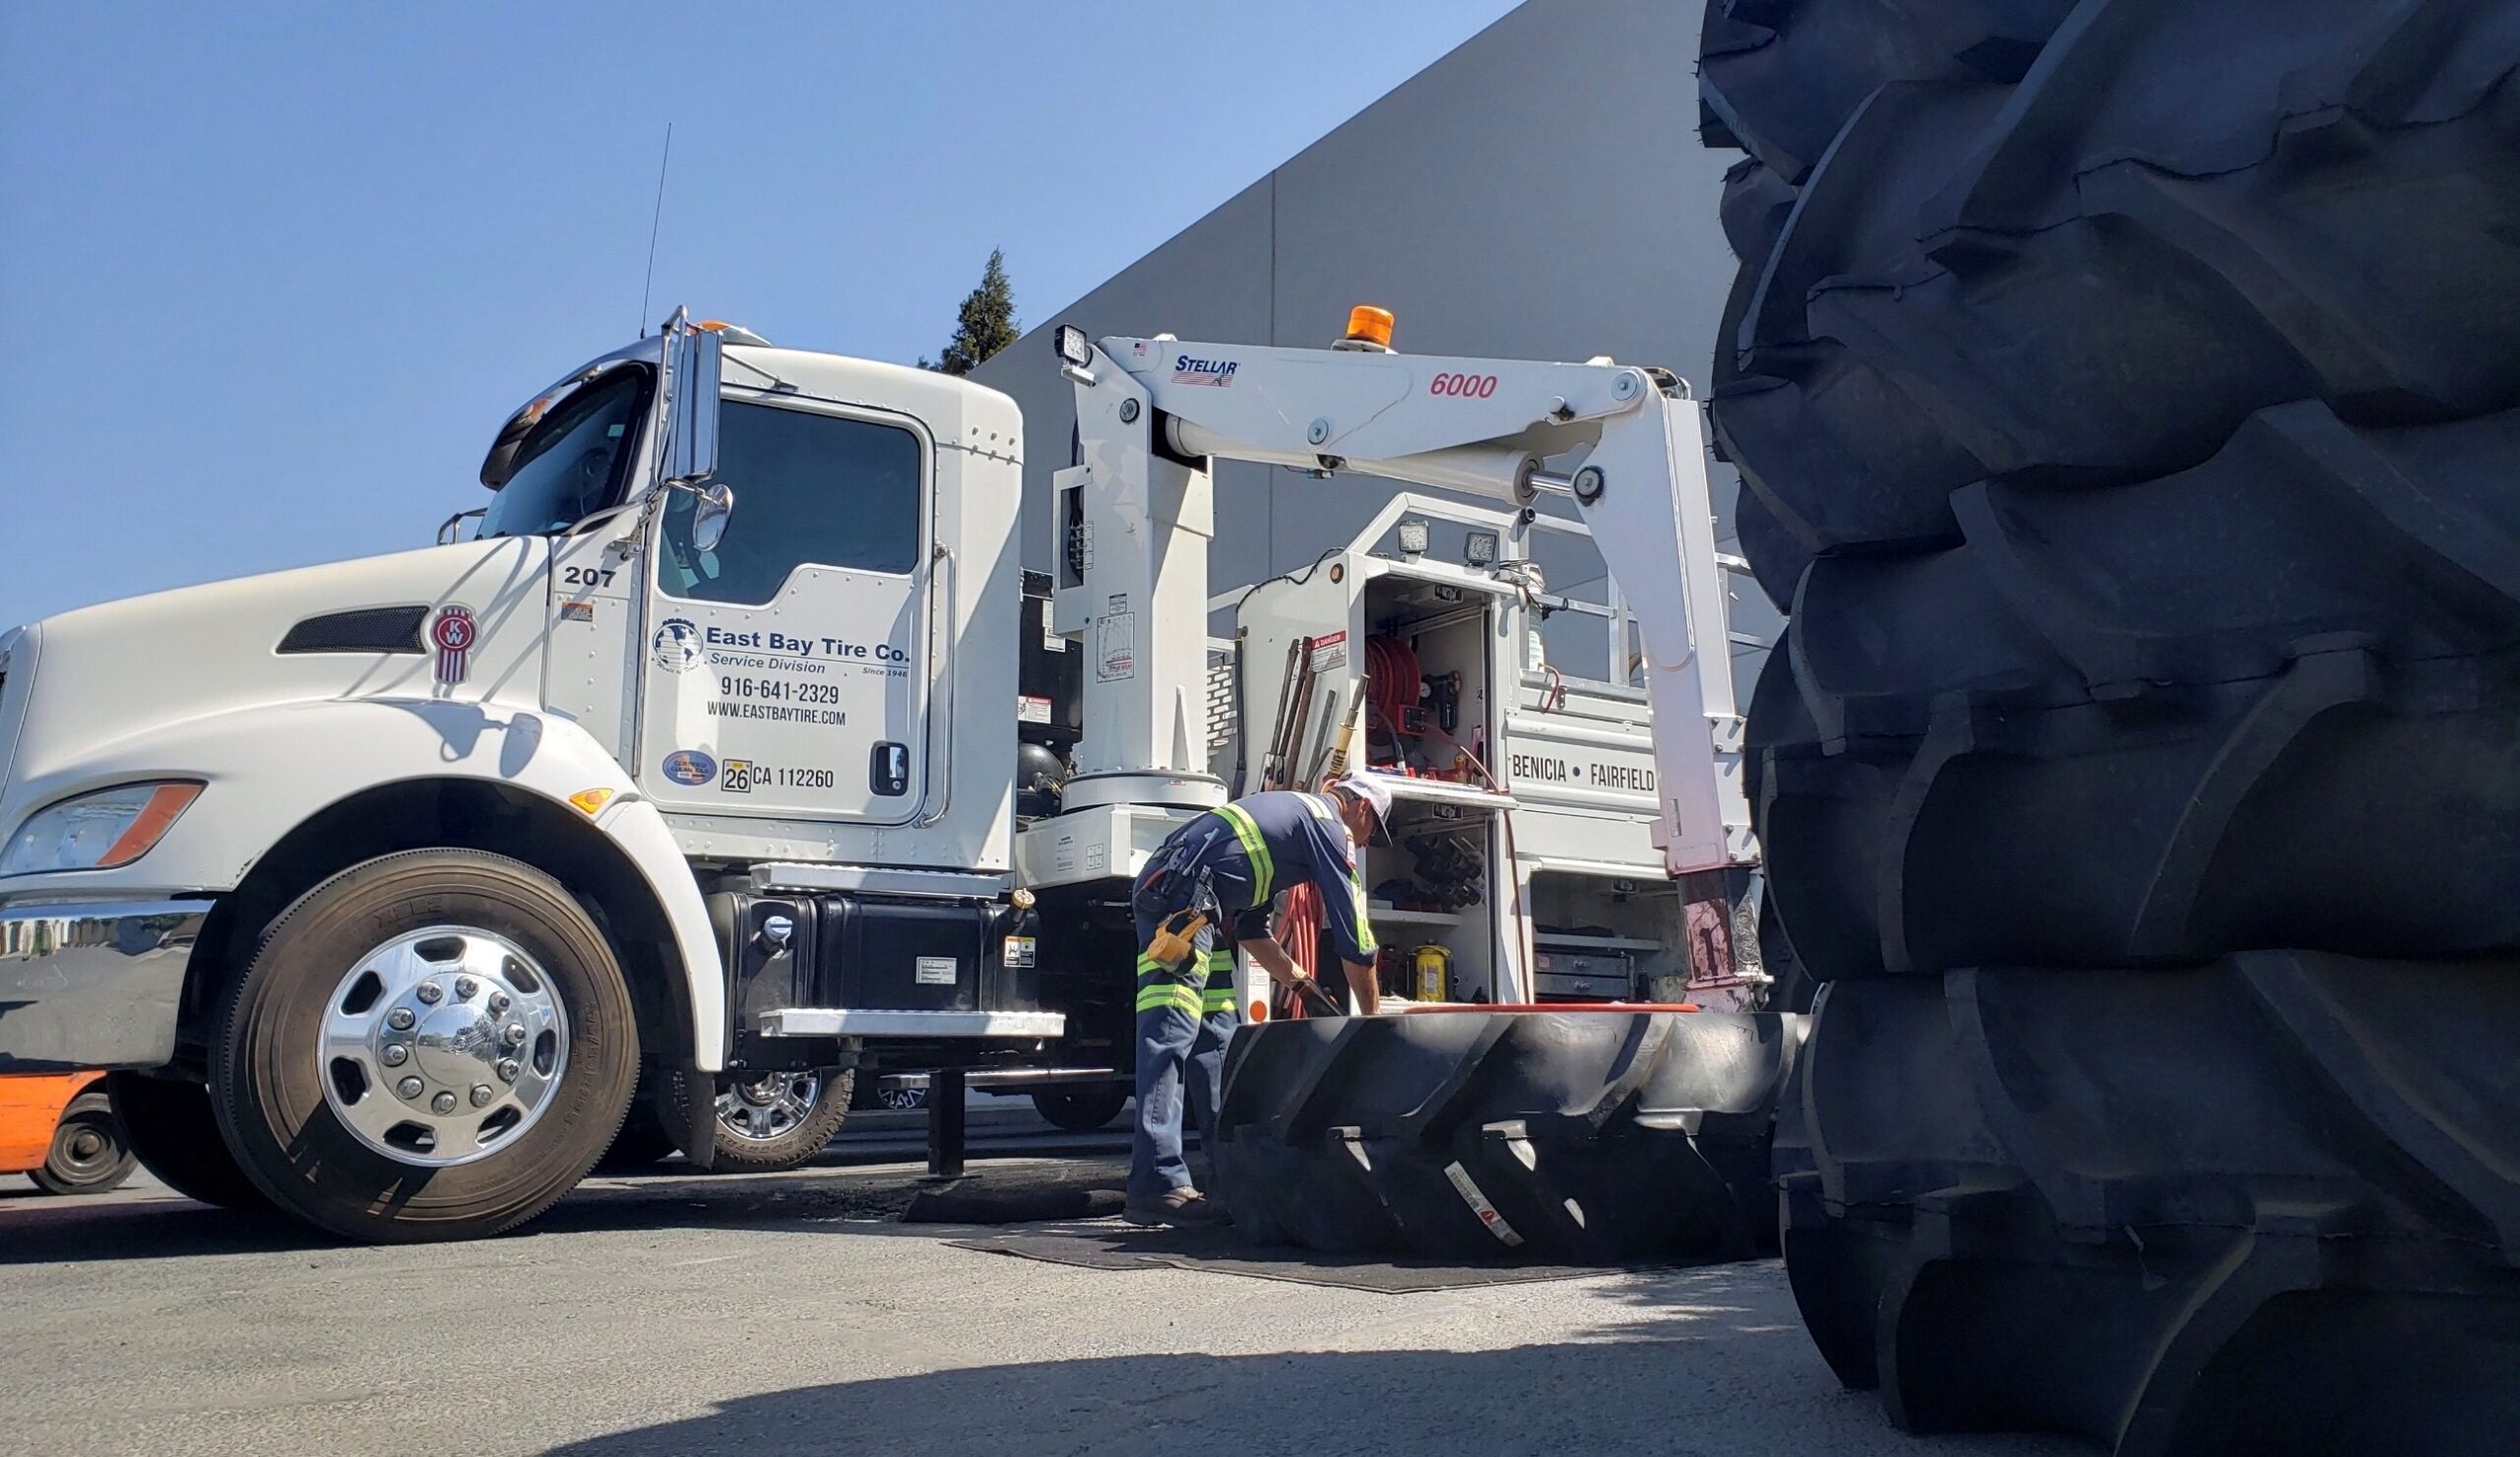 East Bay Tire camión con grandes neumáticos apilados cerca de